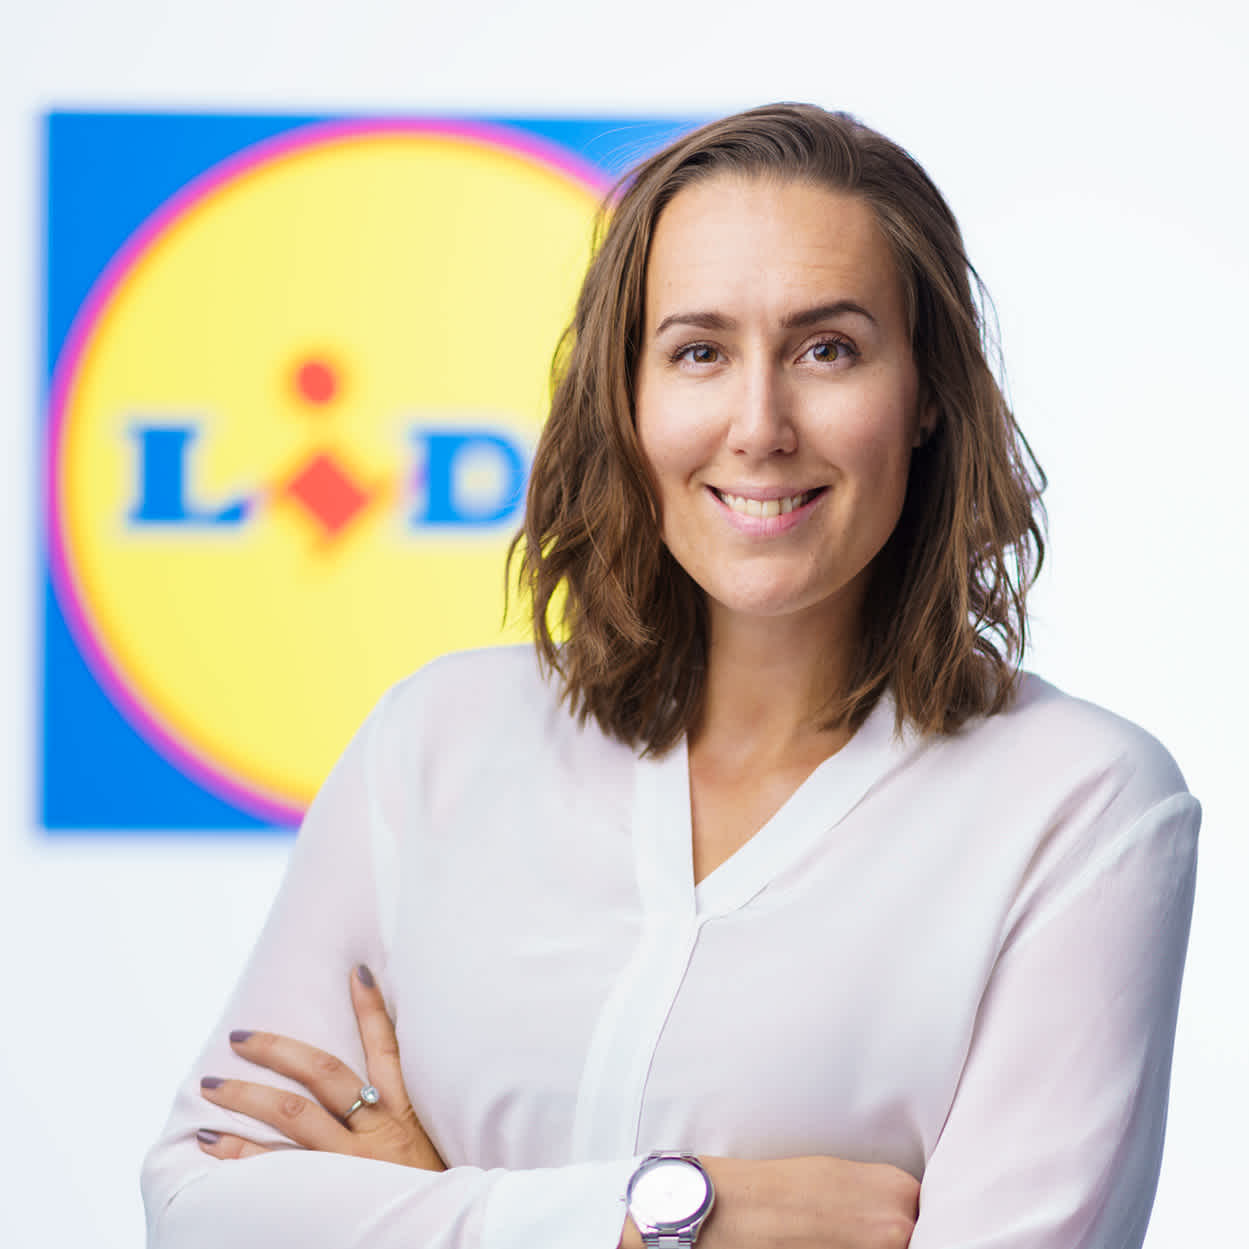 Anna Pärsdotter, Head of Logistics at Lidl Sweden